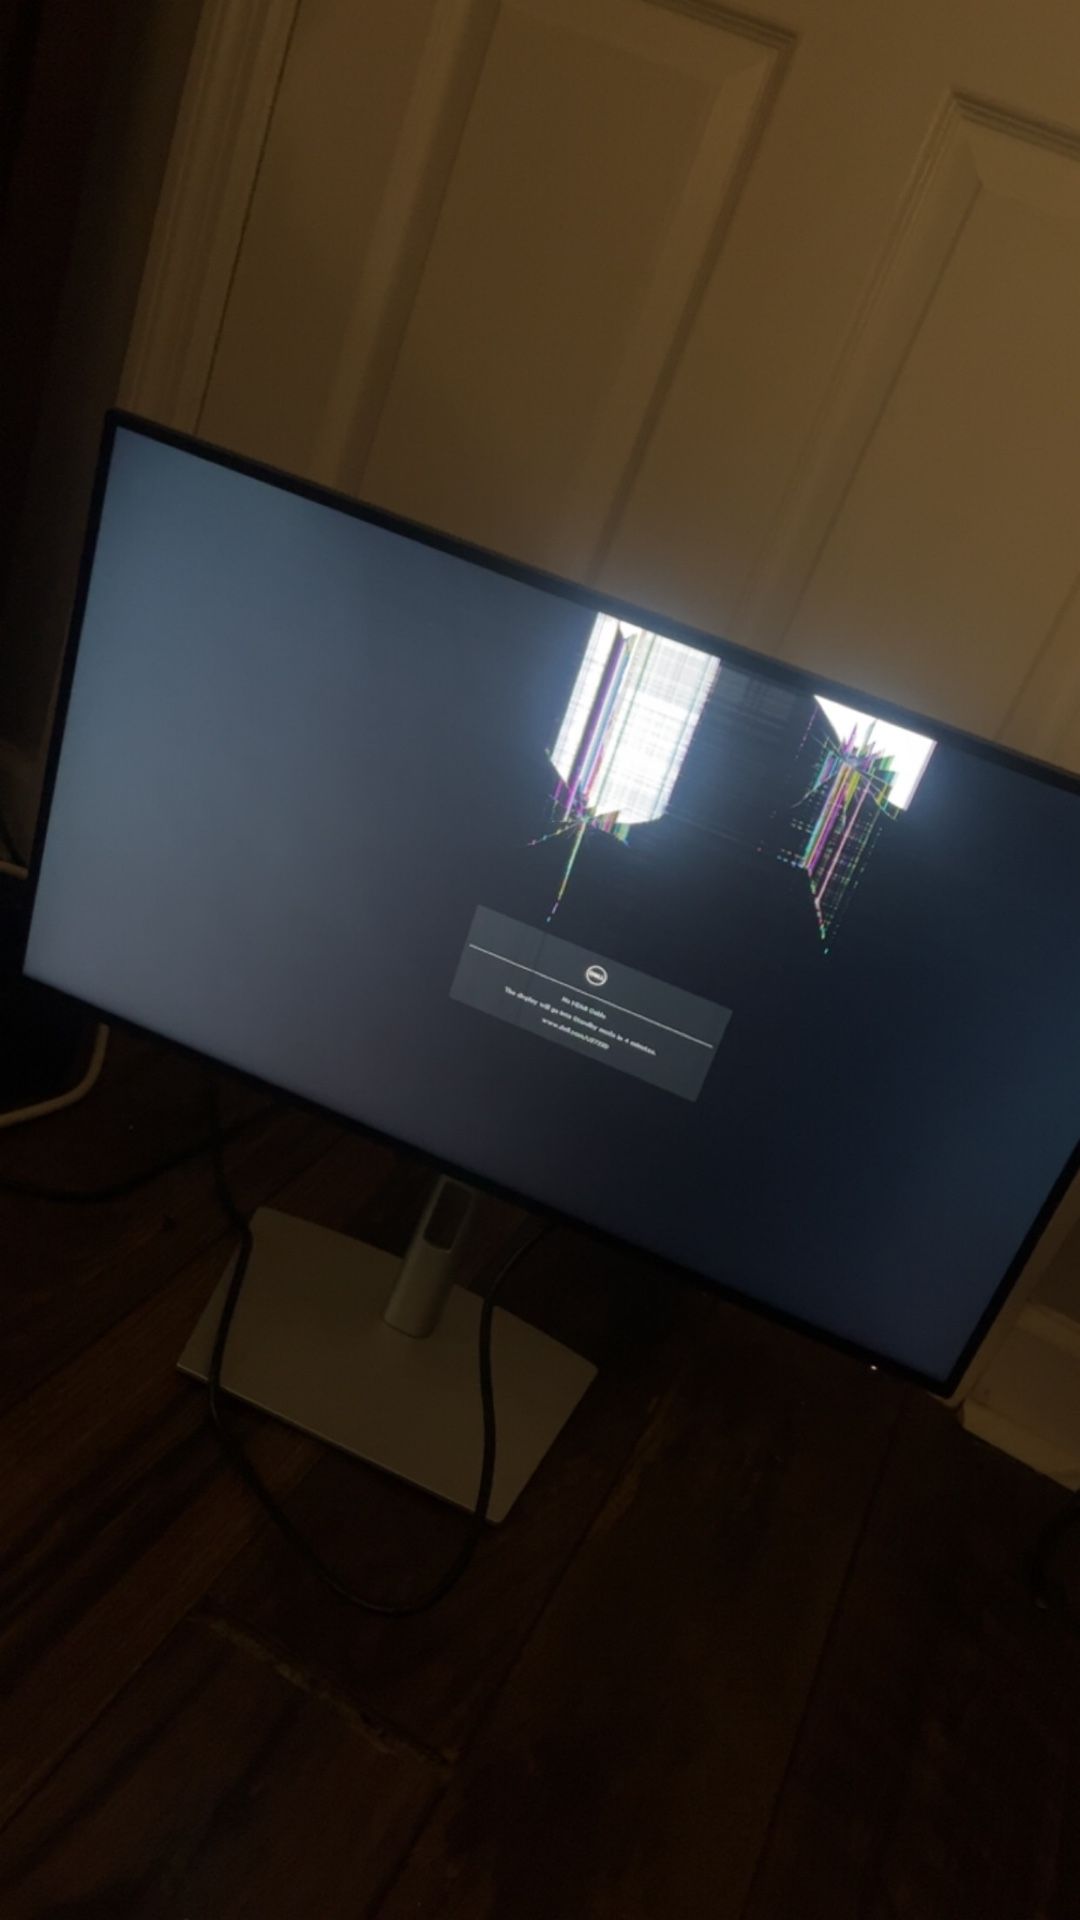 Computer Monitor(broken)